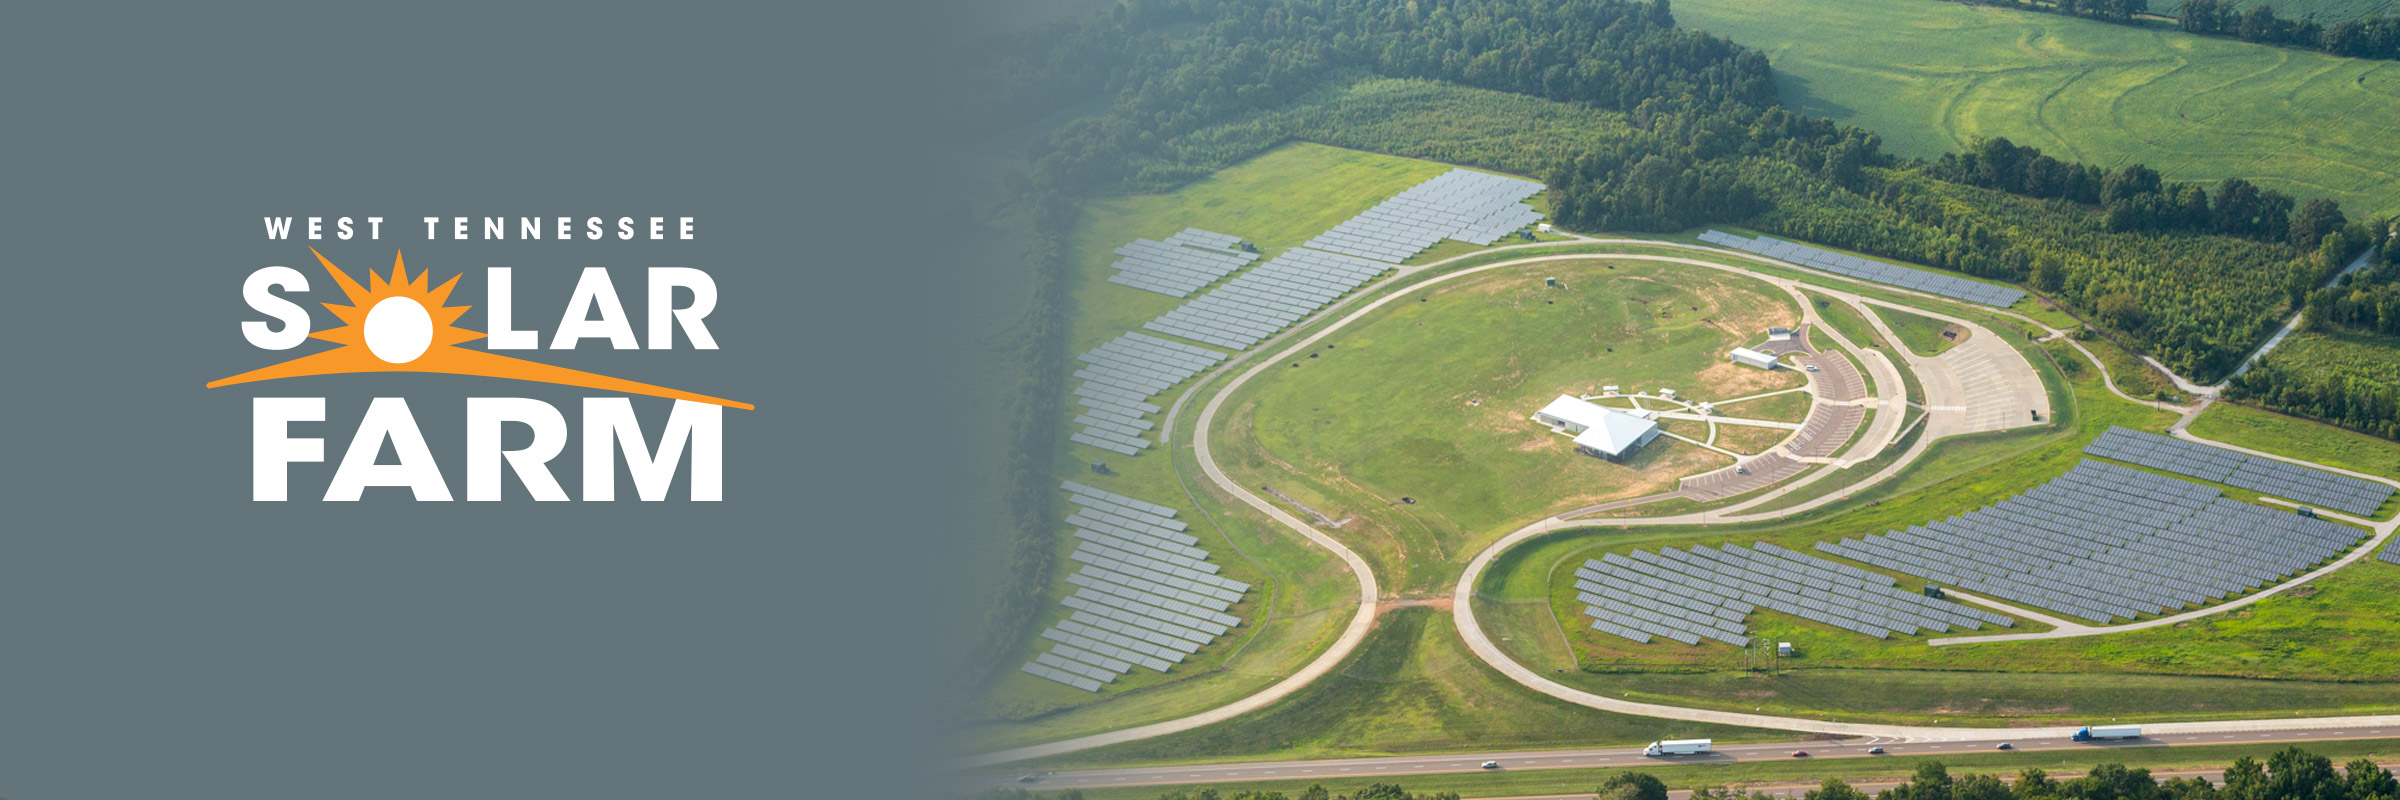 West Tennessee Solar Farm